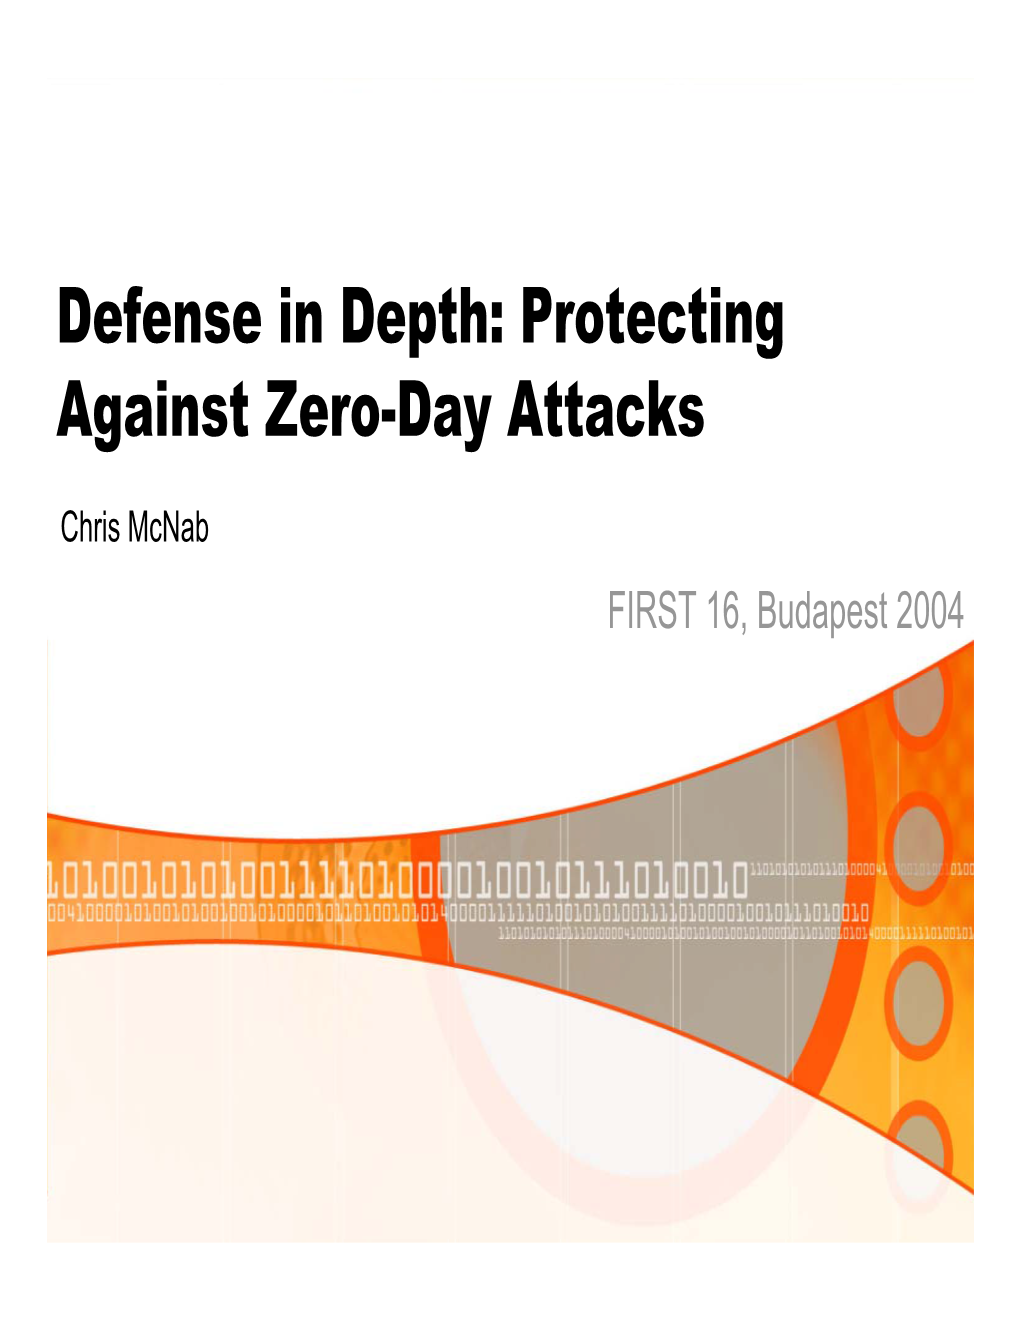 Defense in Depth: Protecting Against Zero-Day Attacks